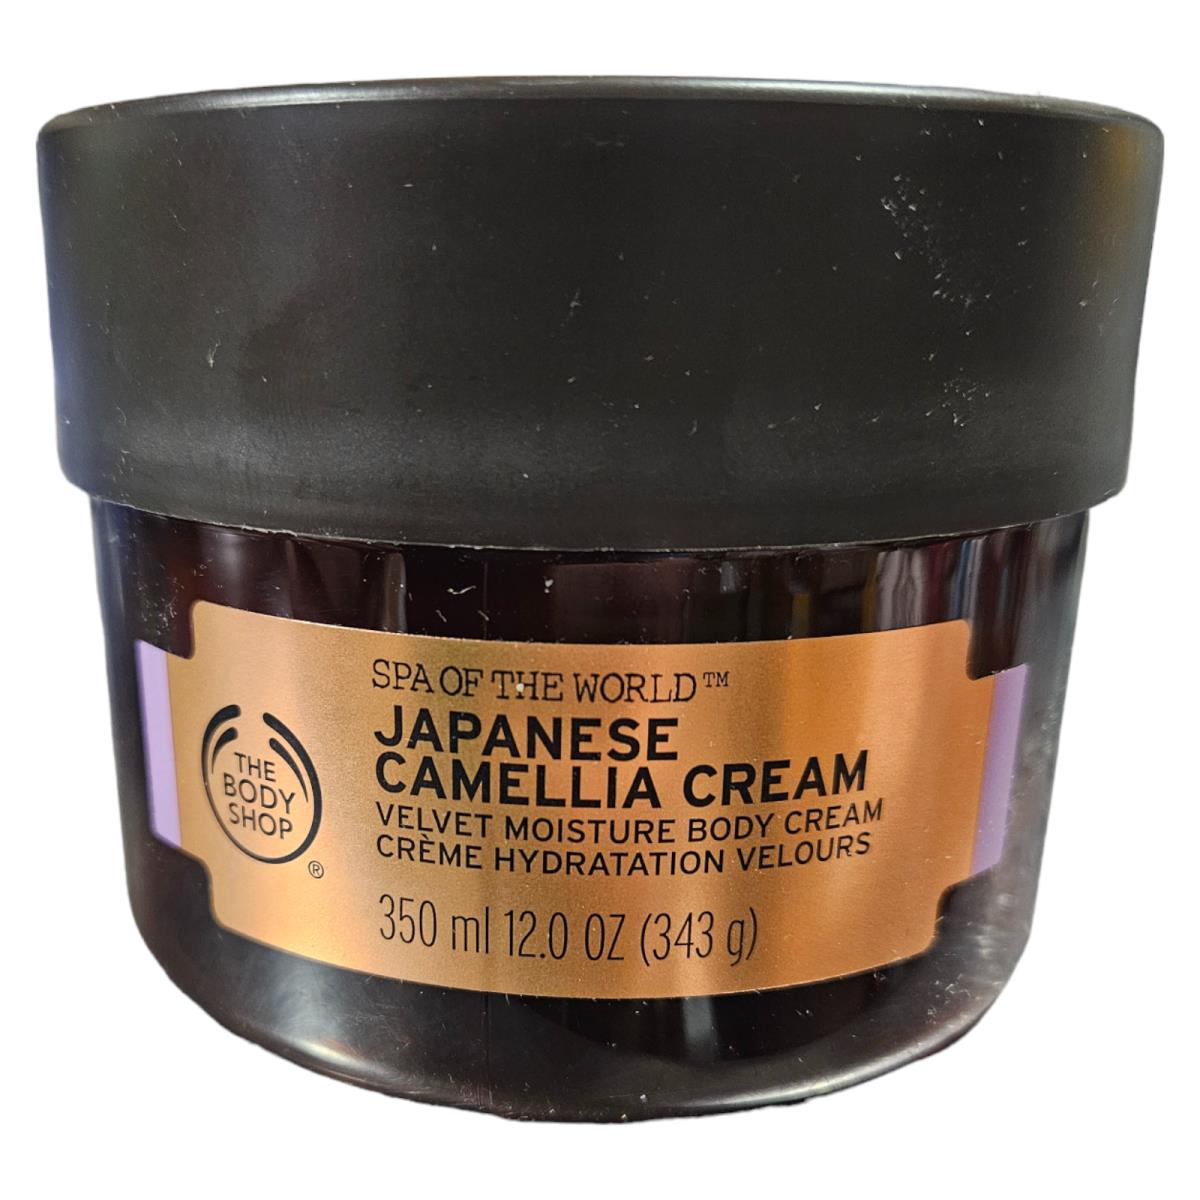 The Body Shop Spa of The World Japanese Camellia Cream 12 oz